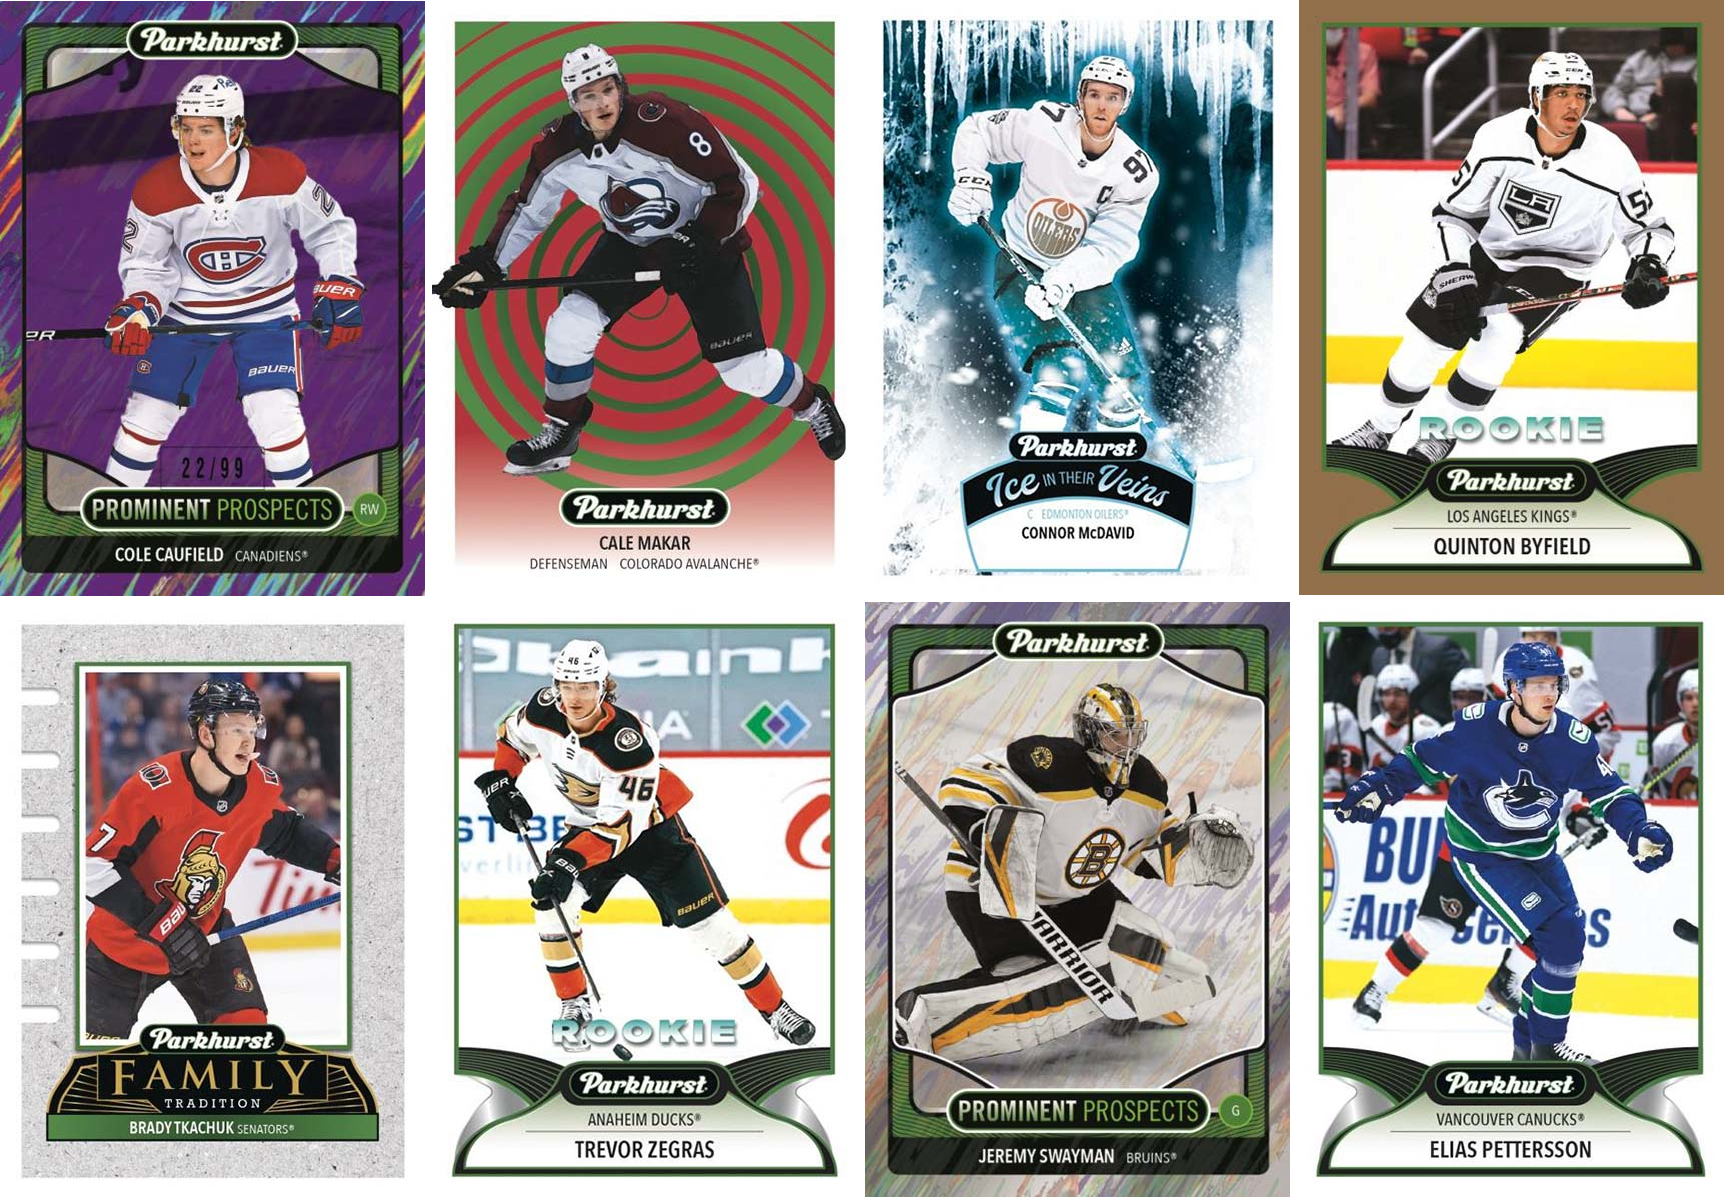 21-22 Upper Deck Parkhurst Blaster Box Hockey Trading Cards - image 2 of 3